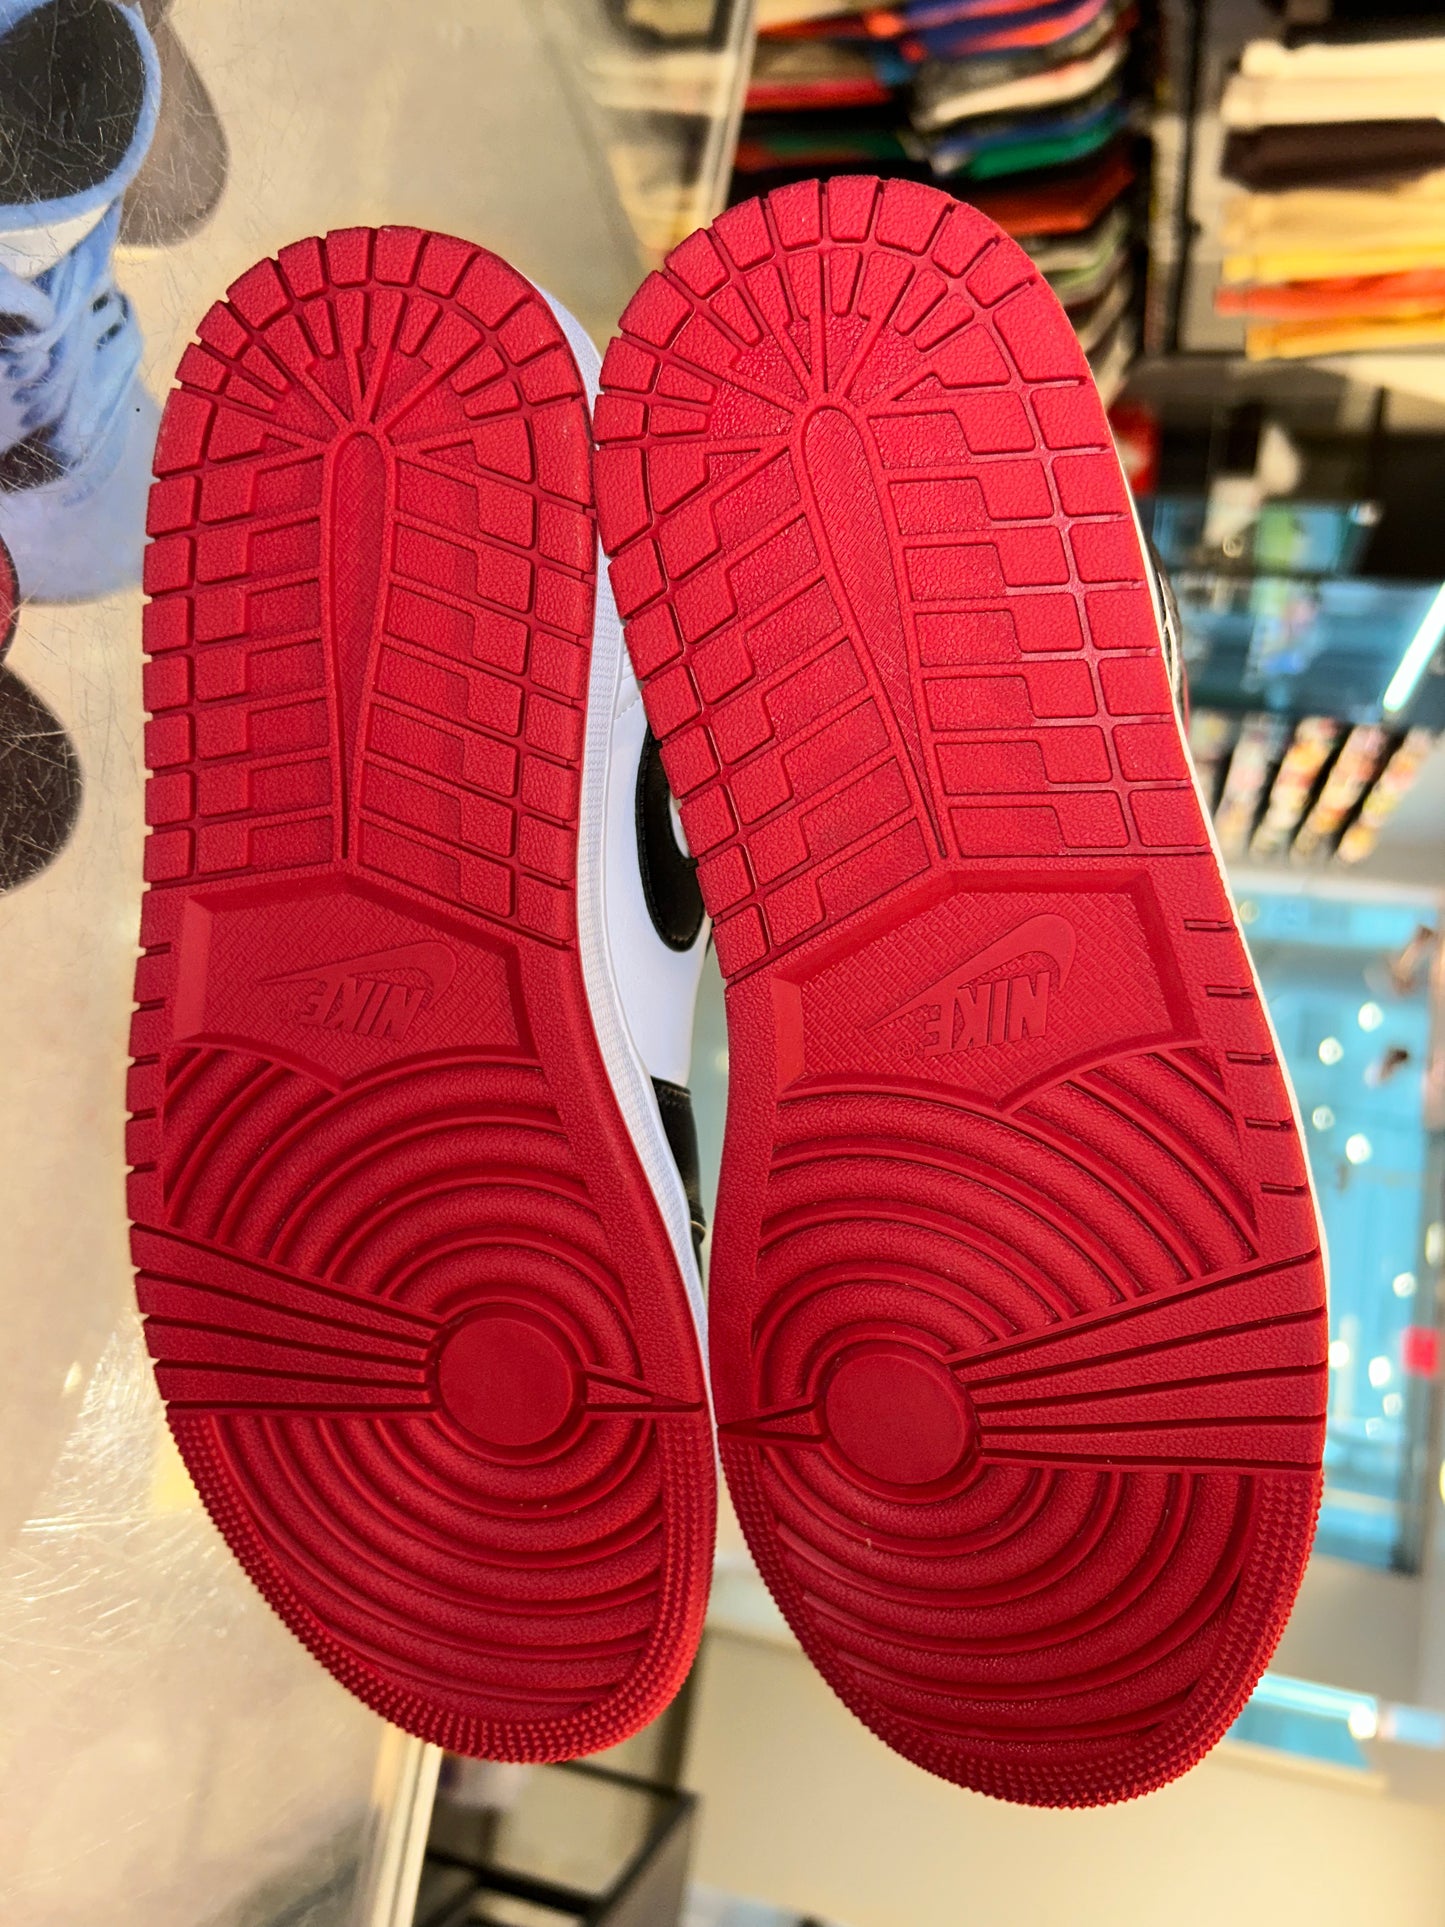 Size 9.5 Air Jordan 1 Mid “Gym Red Black Toe” Brand New